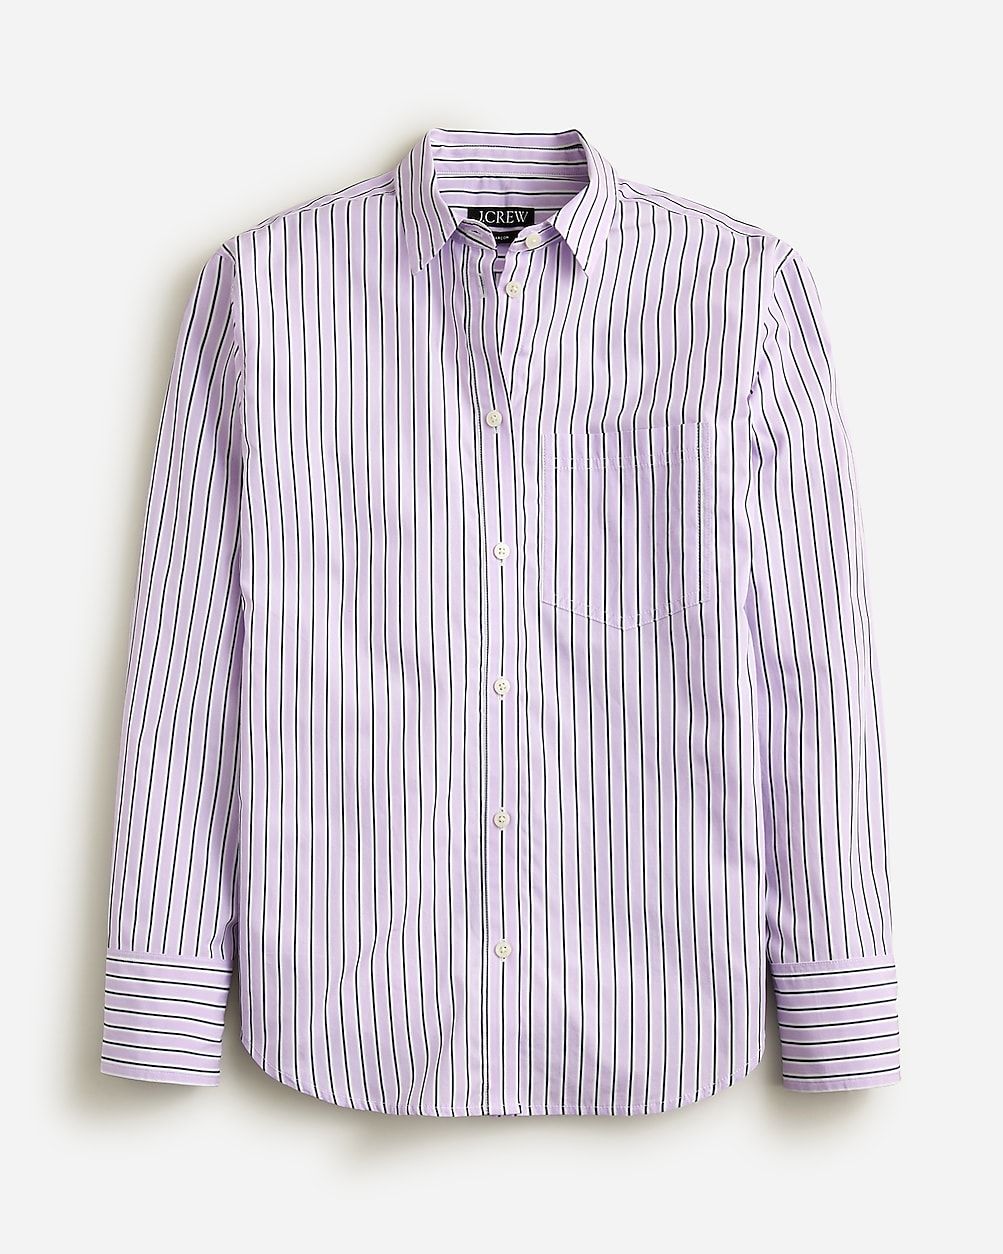 Garçon classic shirt in striped cotton poplin | J.Crew US